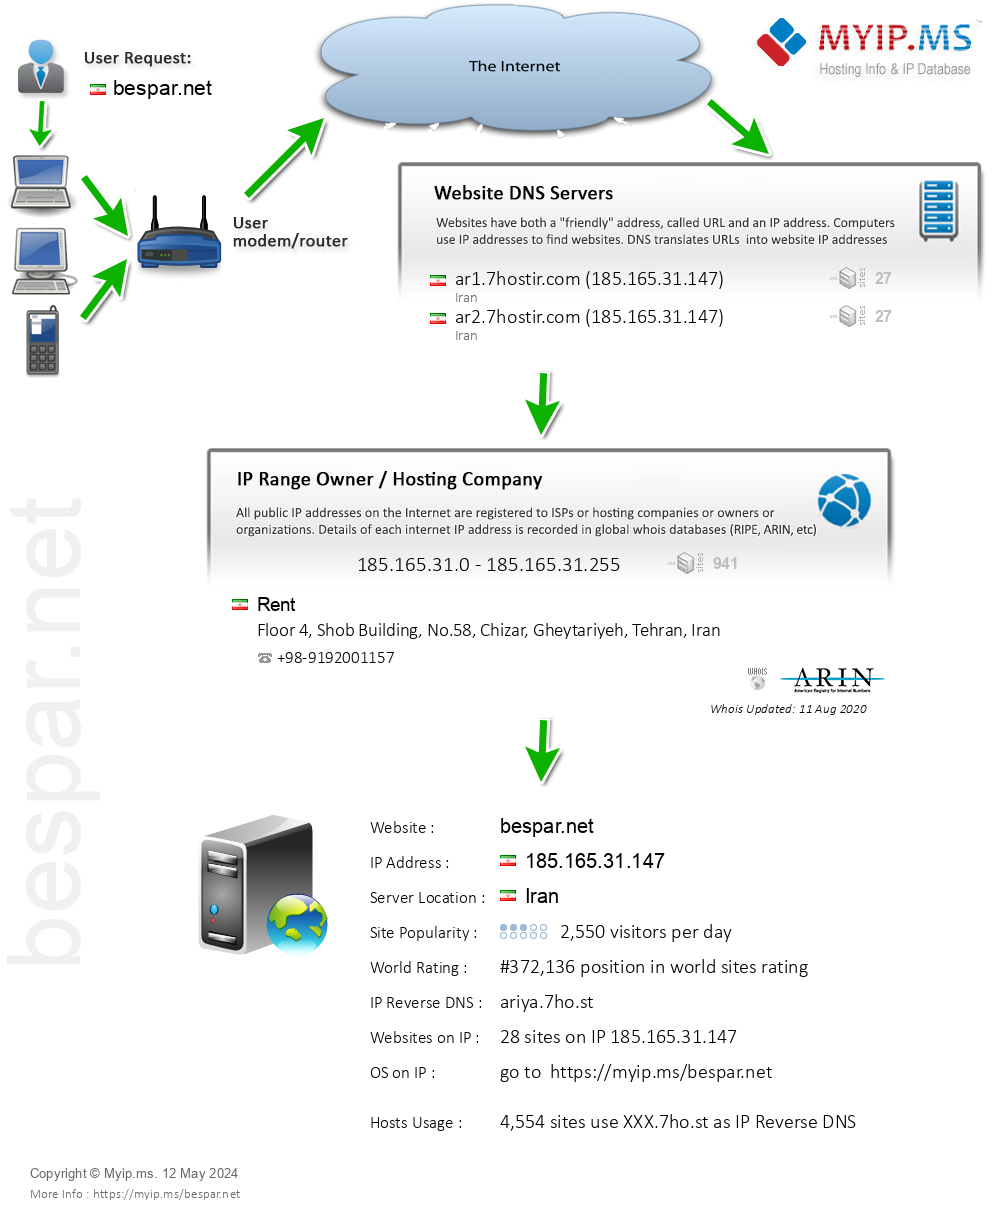 Bespar.net - Website Hosting Visual IP Diagram